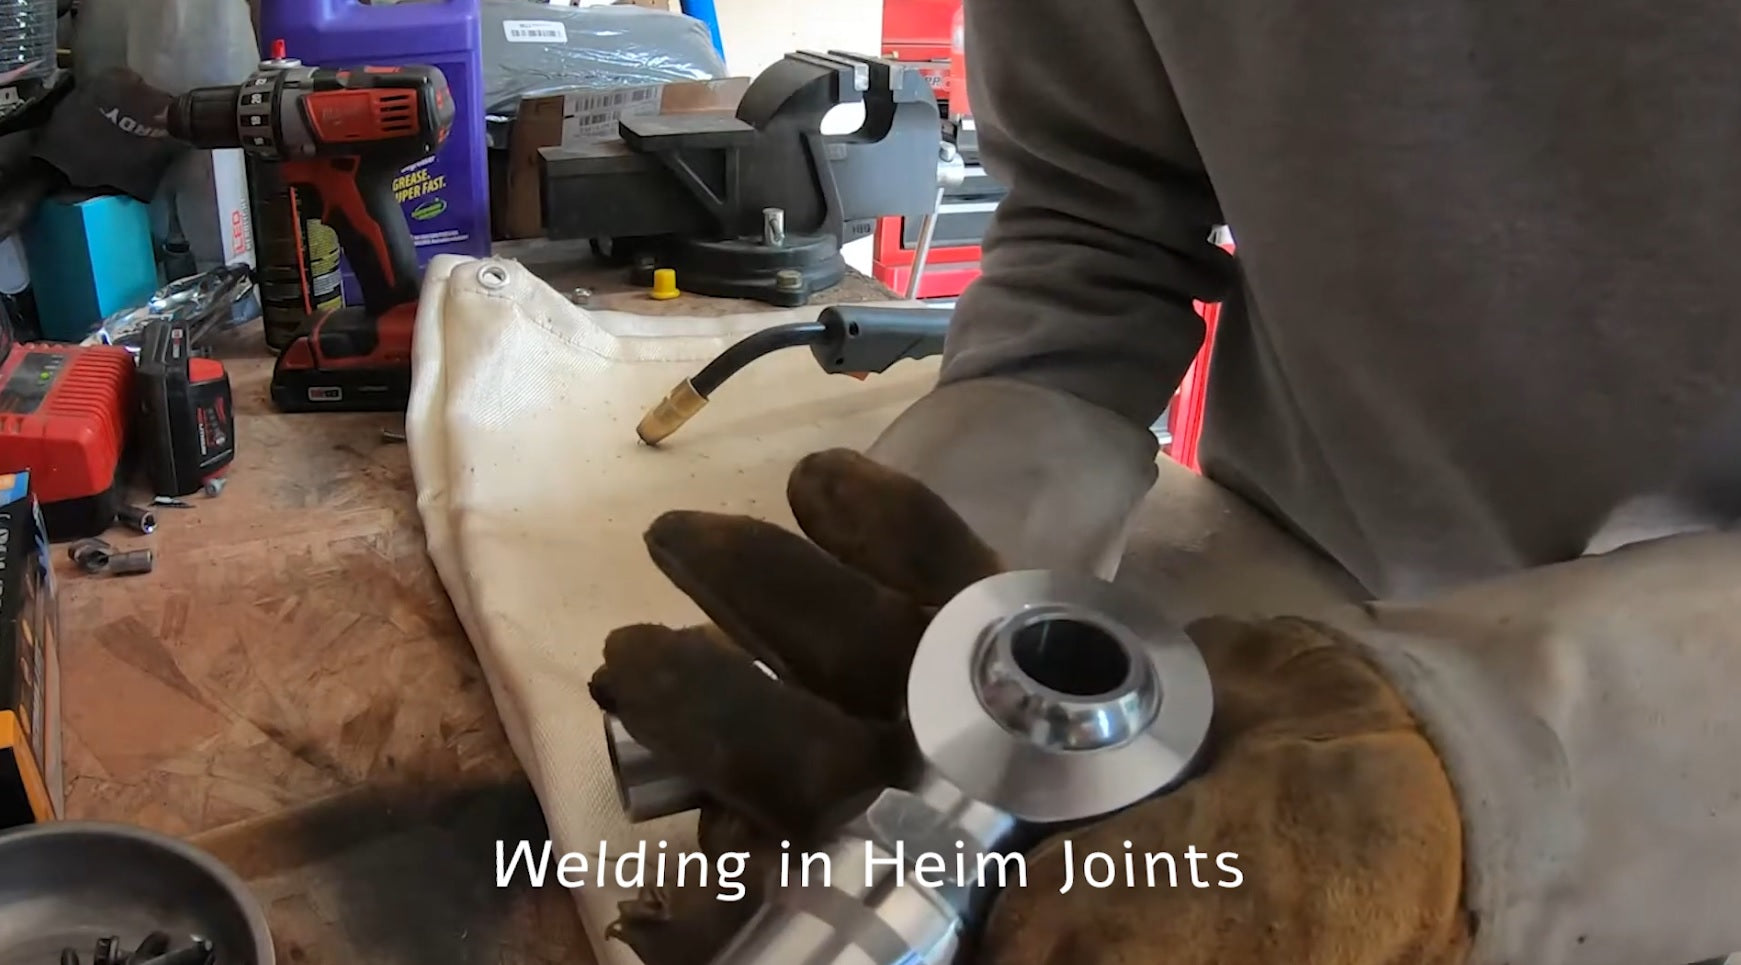 Load video: Welding in heim joints